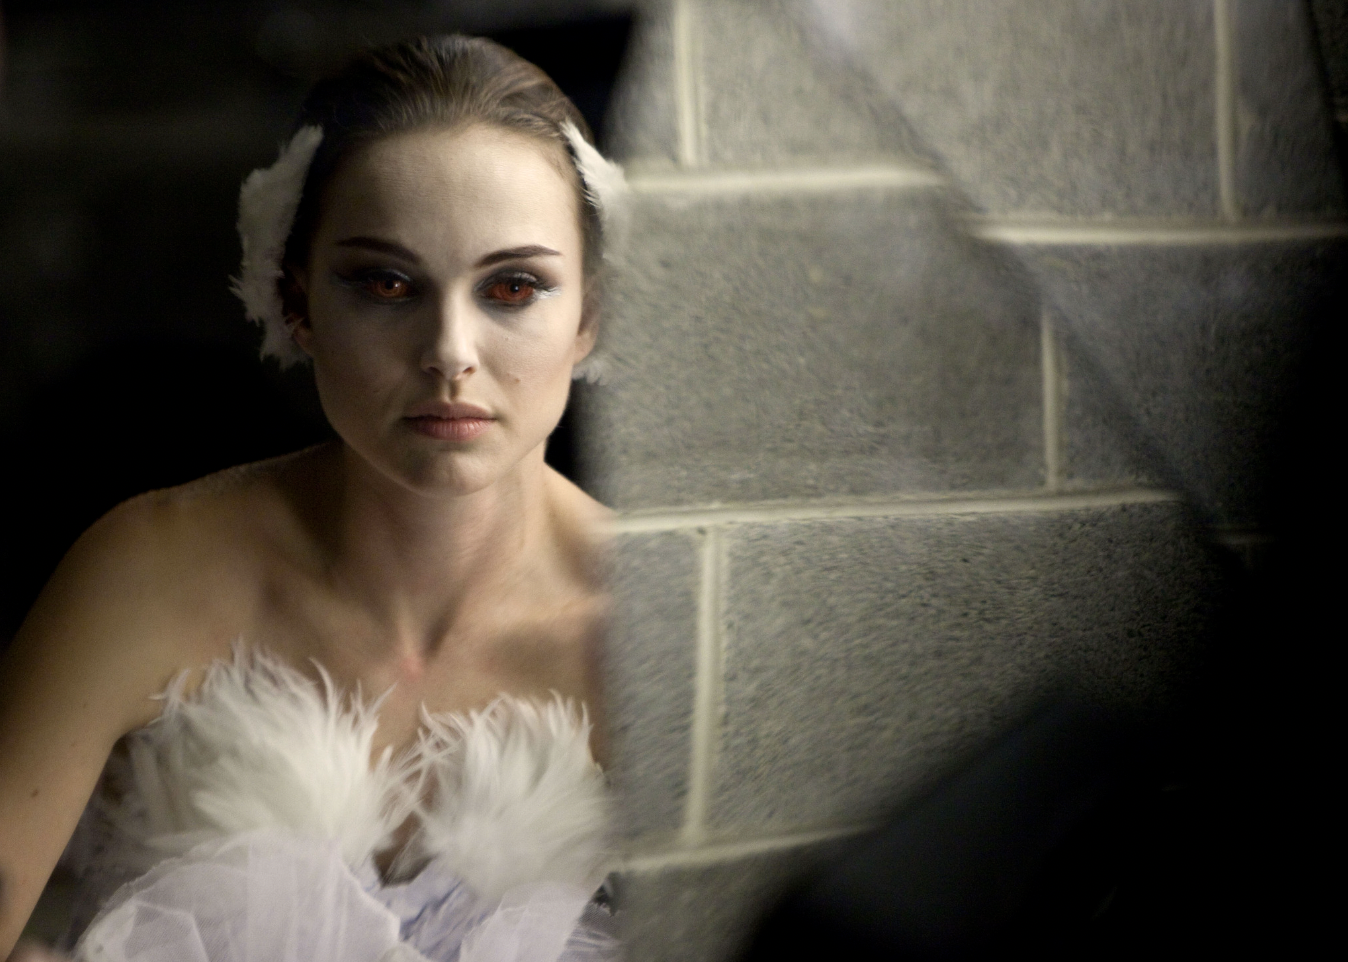 Natalie Portman in "Black Swan"